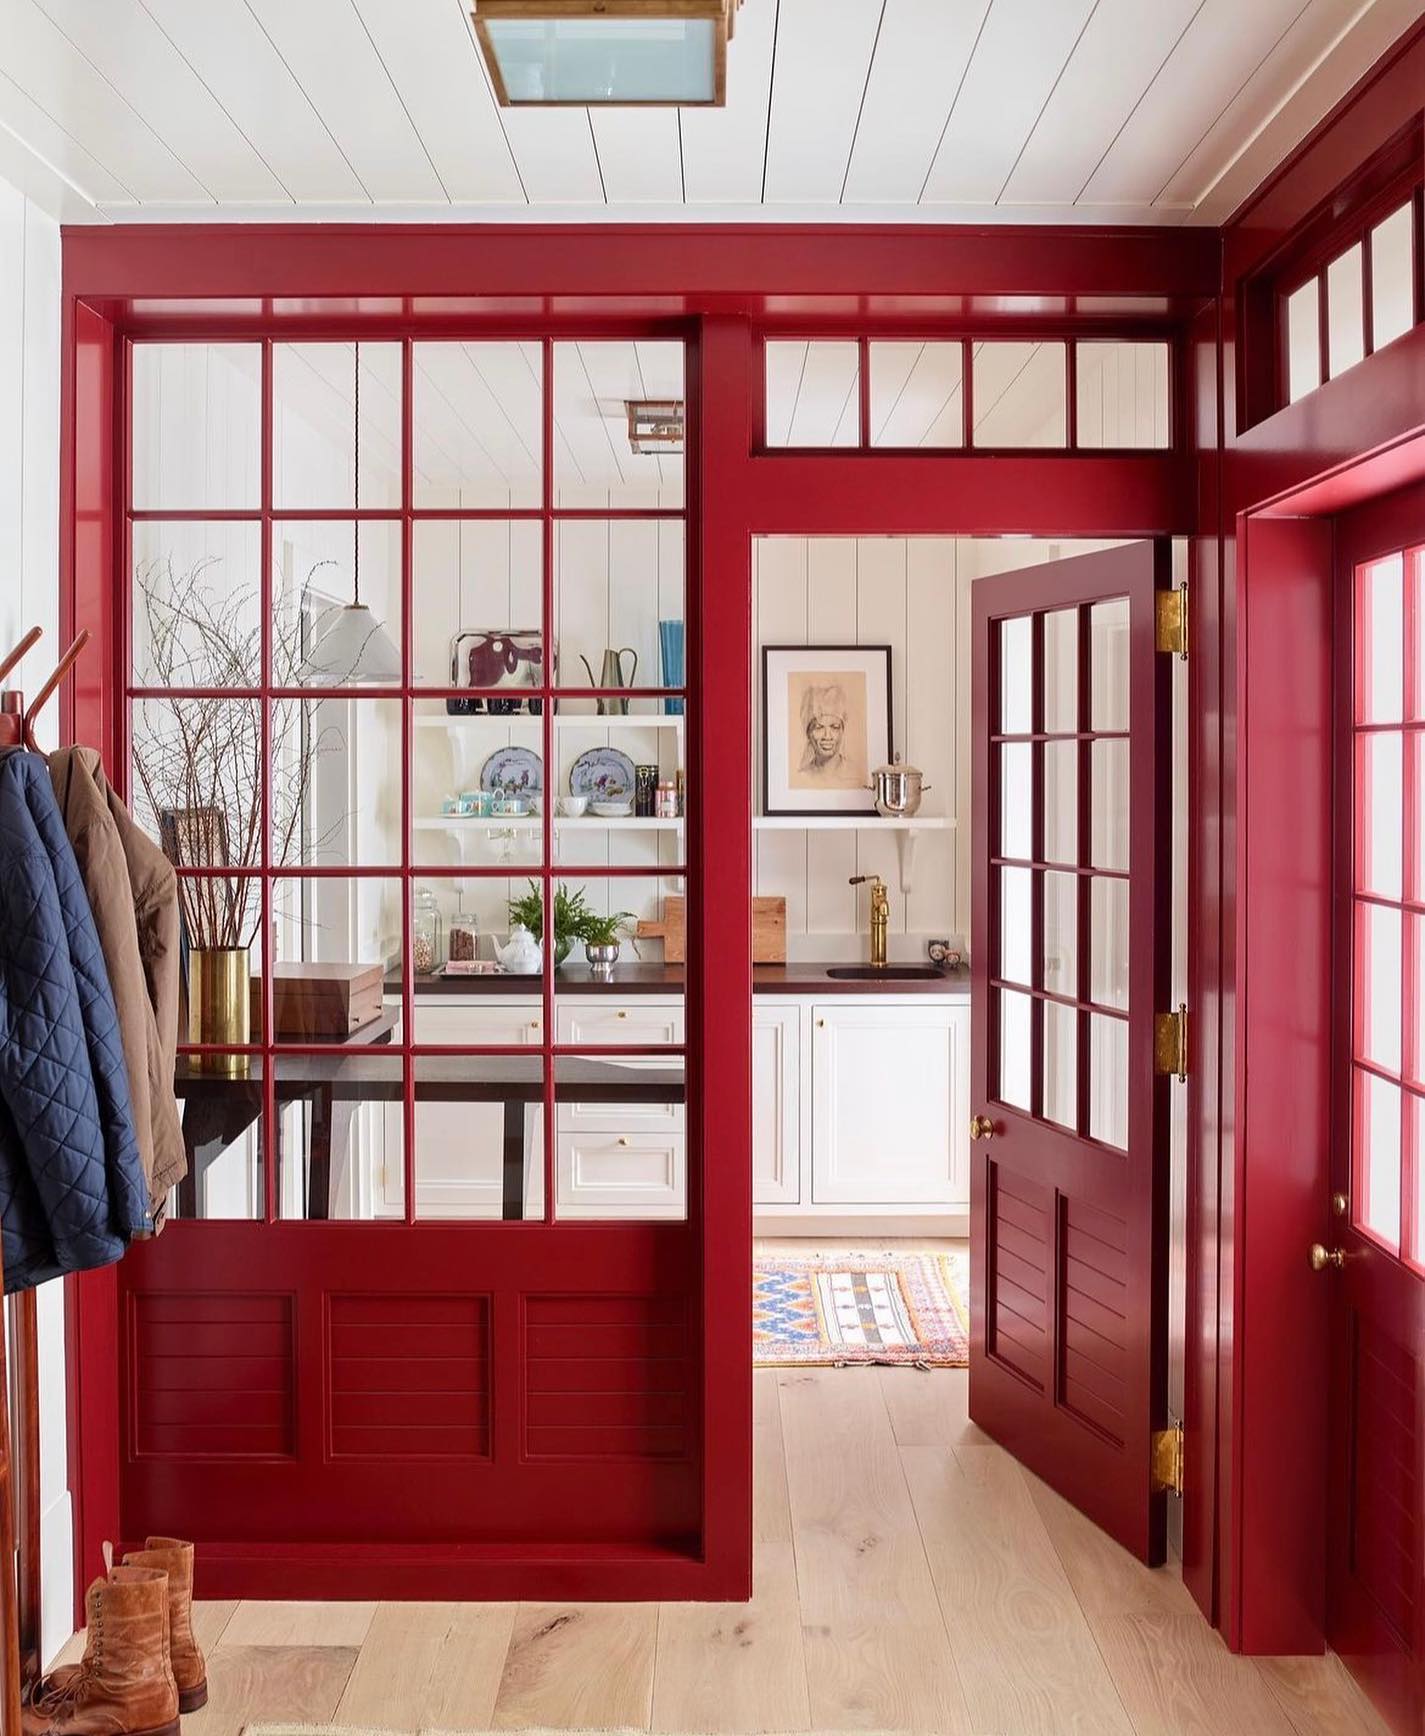 Дверь кухни с лестницой картины закрытая. Country Home Kitchen Interior. Internal red